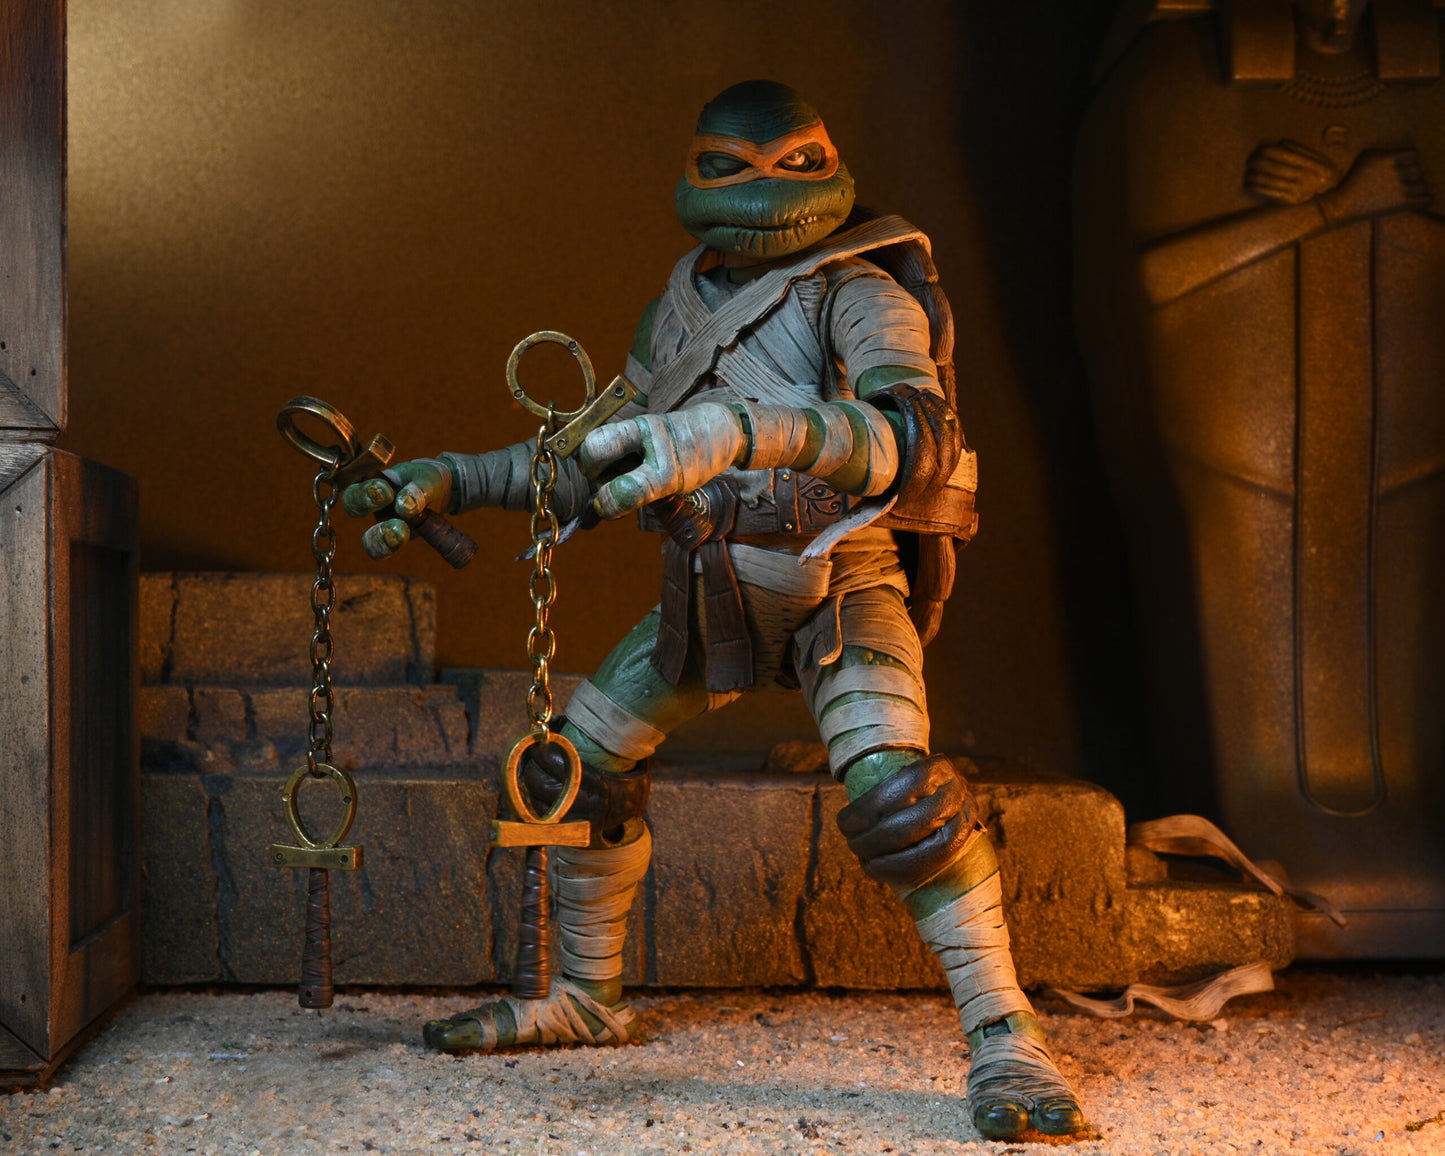 Universal Monsters/Teenage Mutant Ninja Turtles 7” Scale Action Figure – Michelangelo as The Mummy